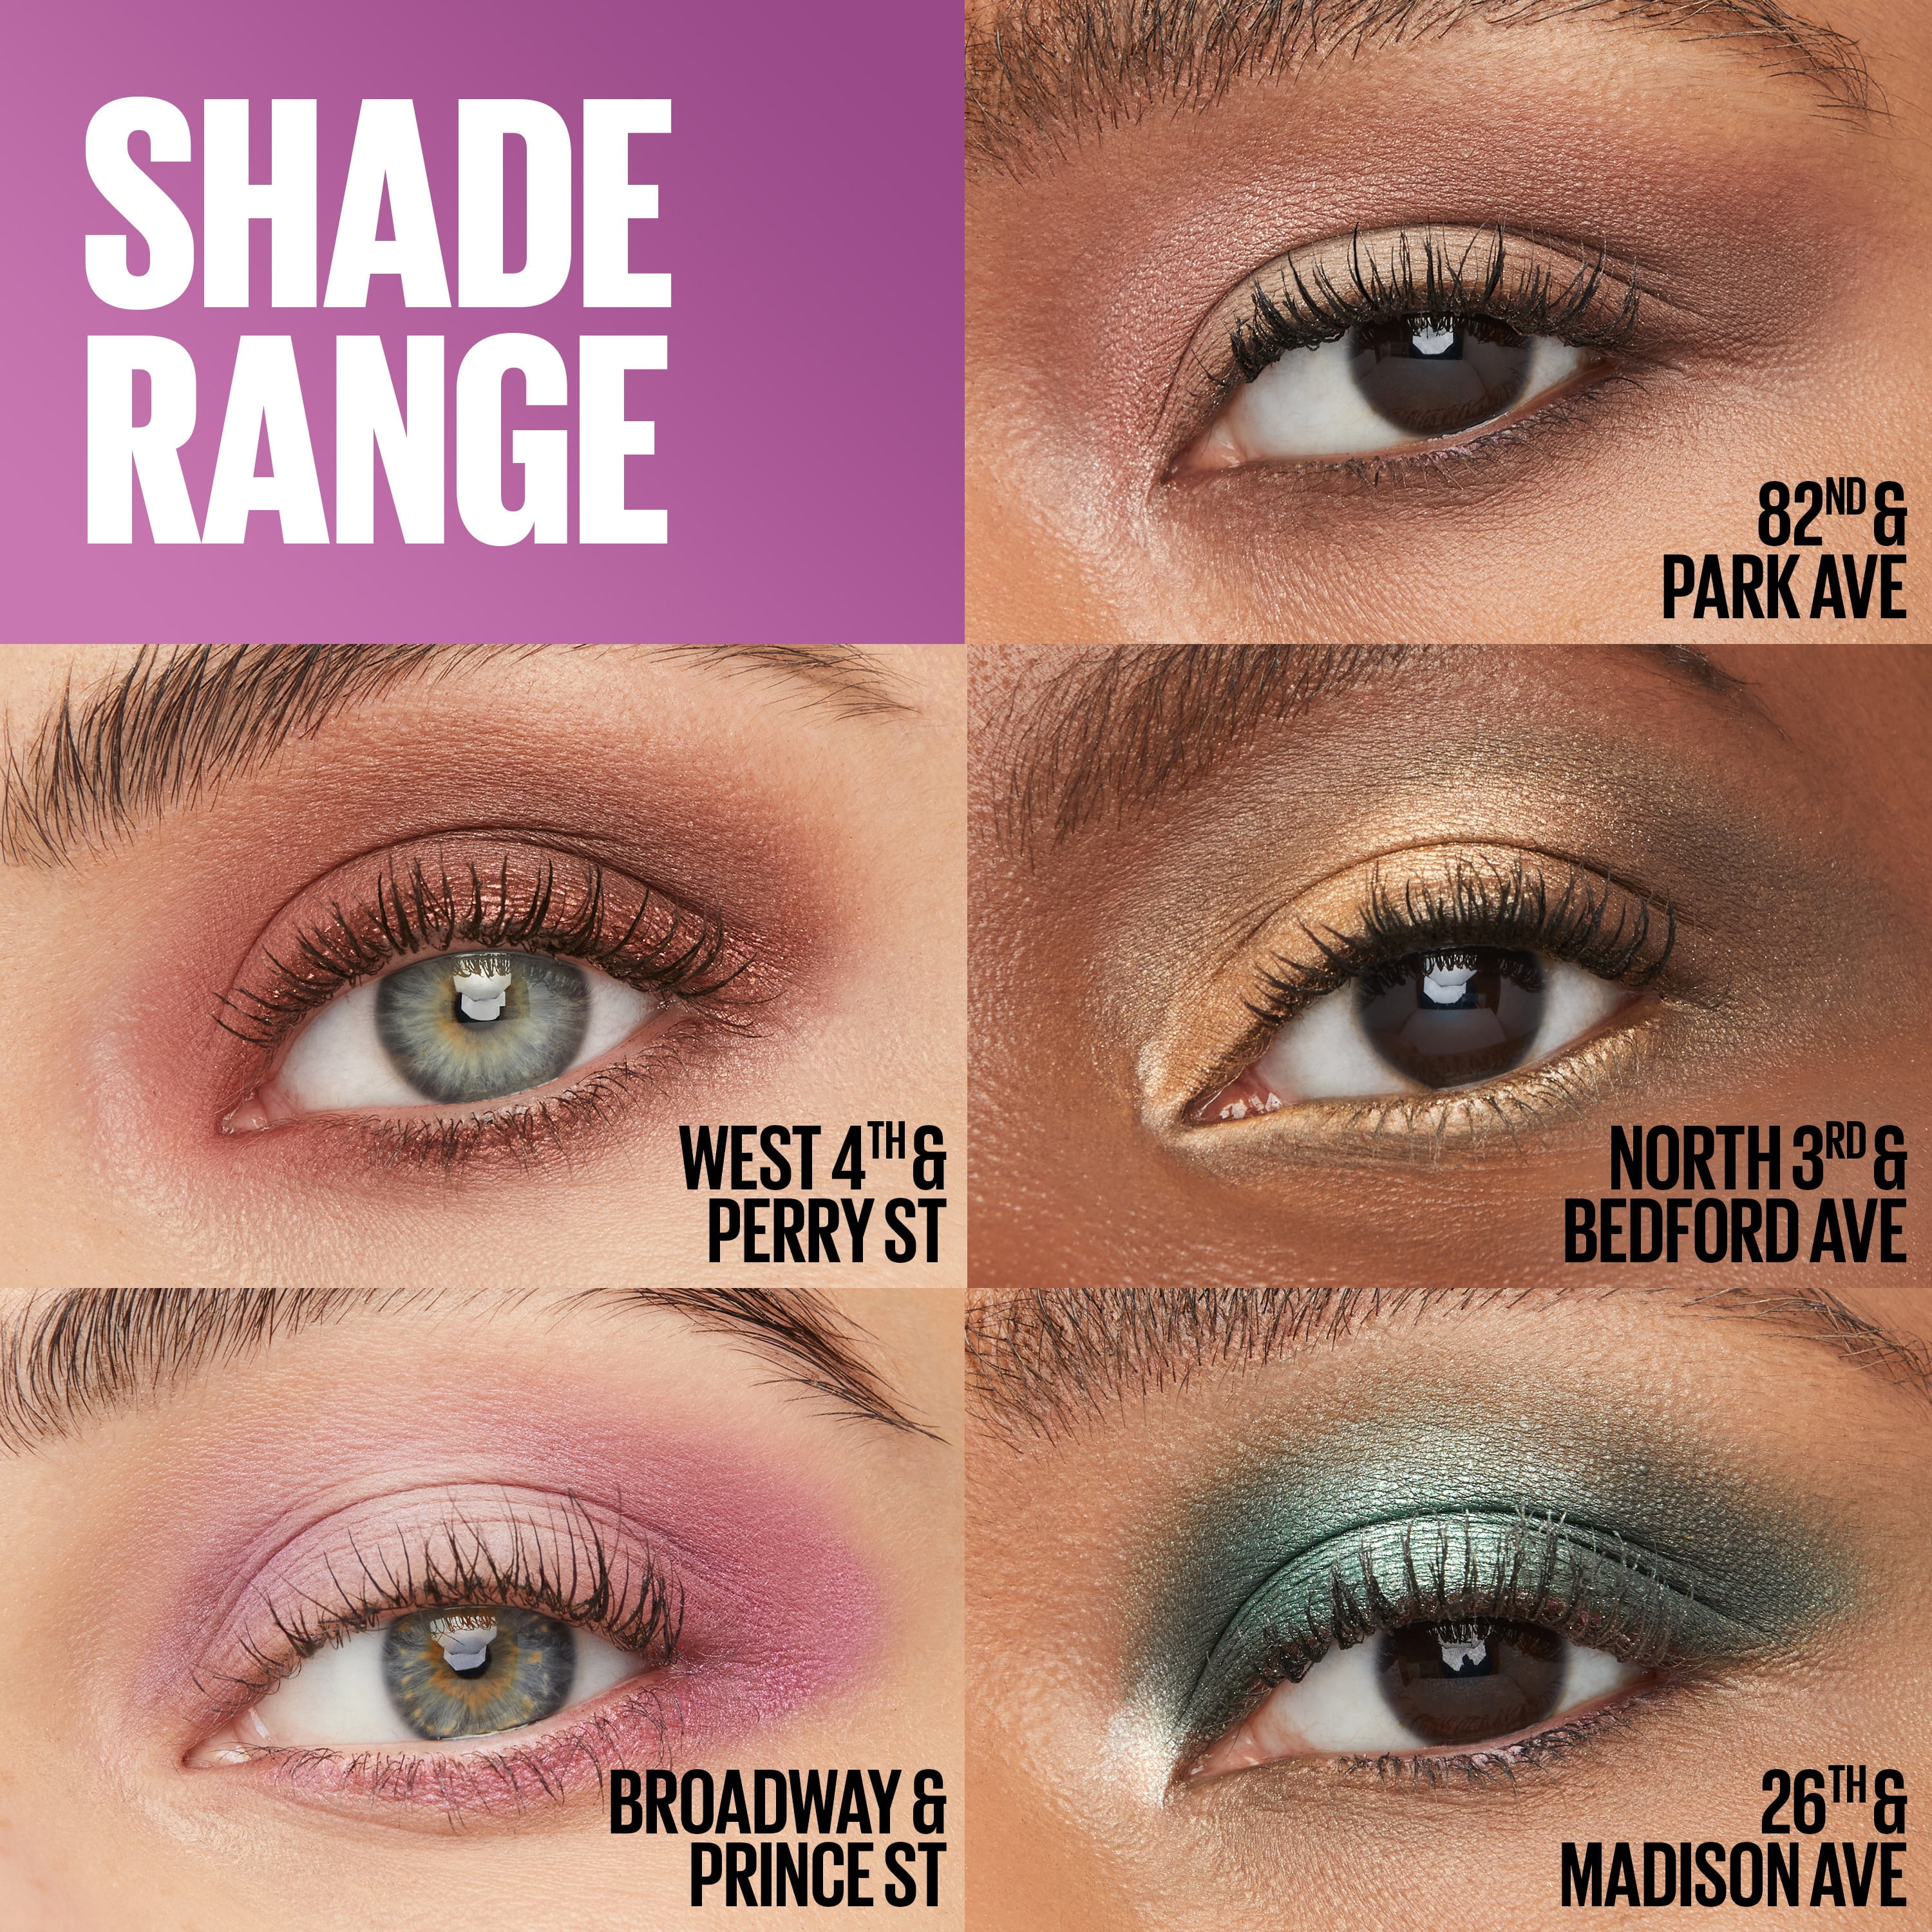 Maybelline Shadow Blocks Shadow Blocks Eyeshadow Palette, 82nd and Park Ave